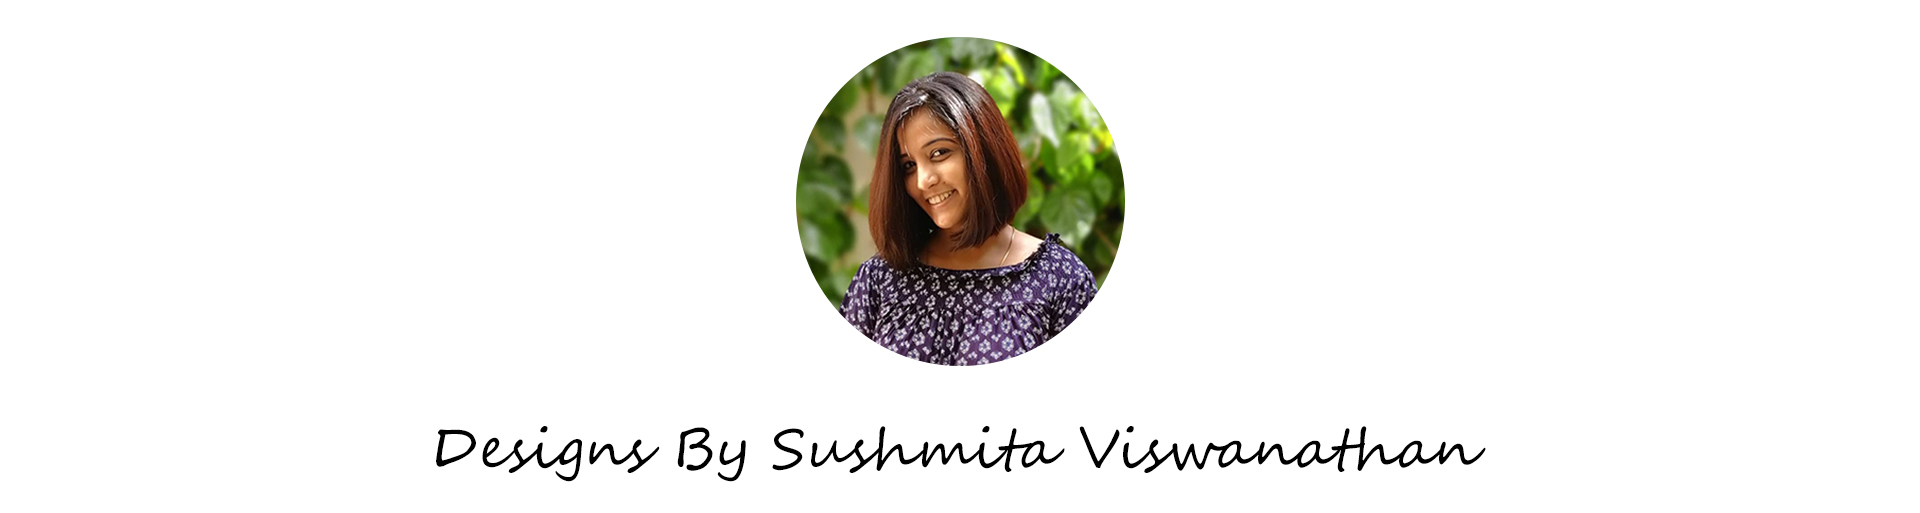 Sushmita Viswanathan